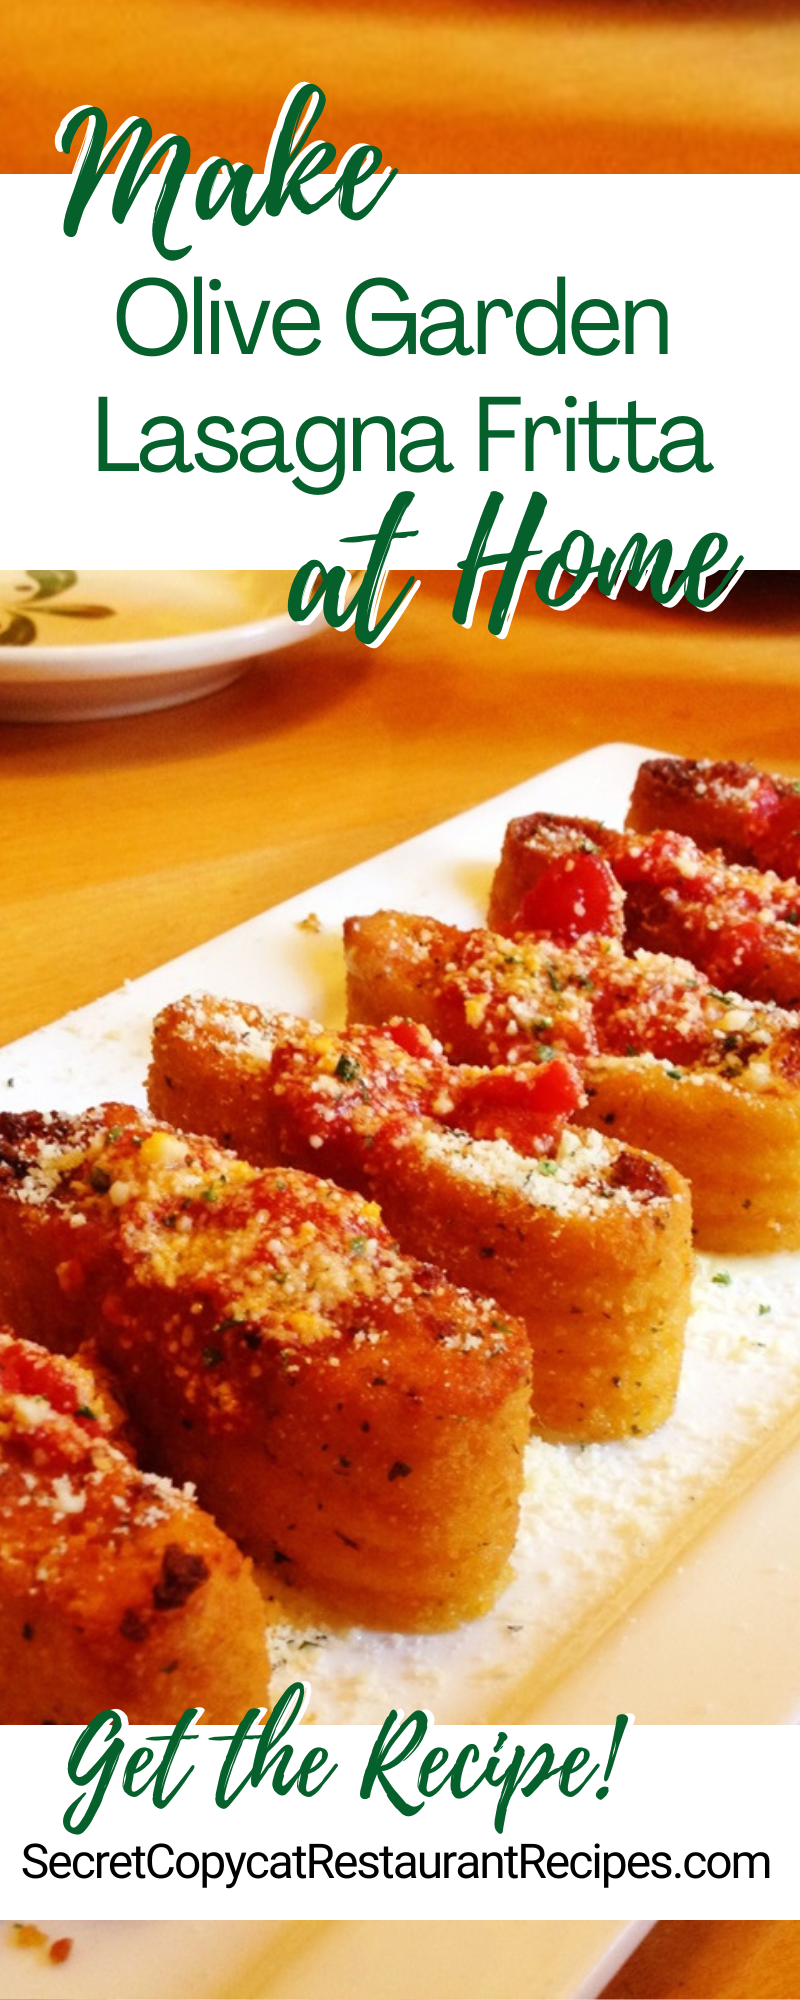 Olive Garden Lasagna Fritta Recipe - Secret Copycat Restaurant Recipes